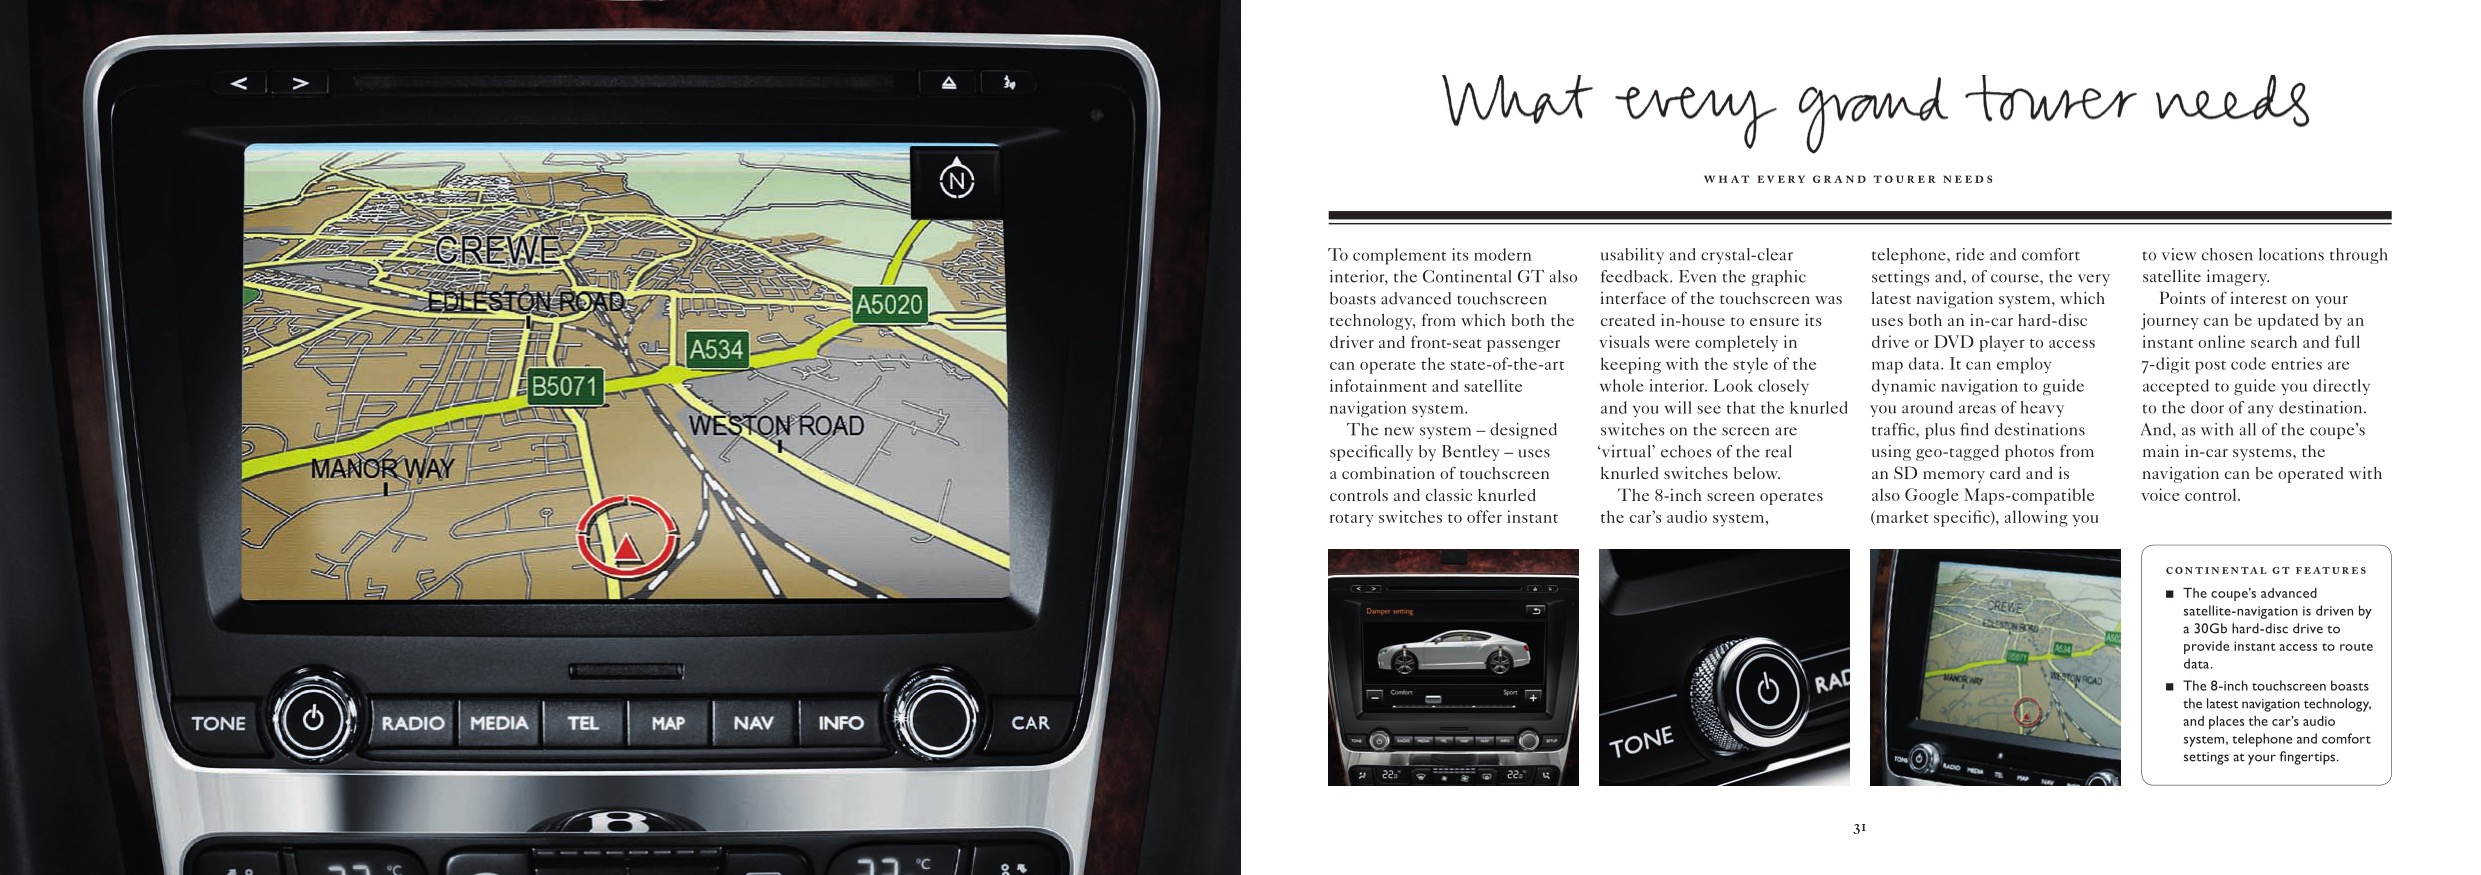 2011 Bentley Continental GT Brochure Page 3